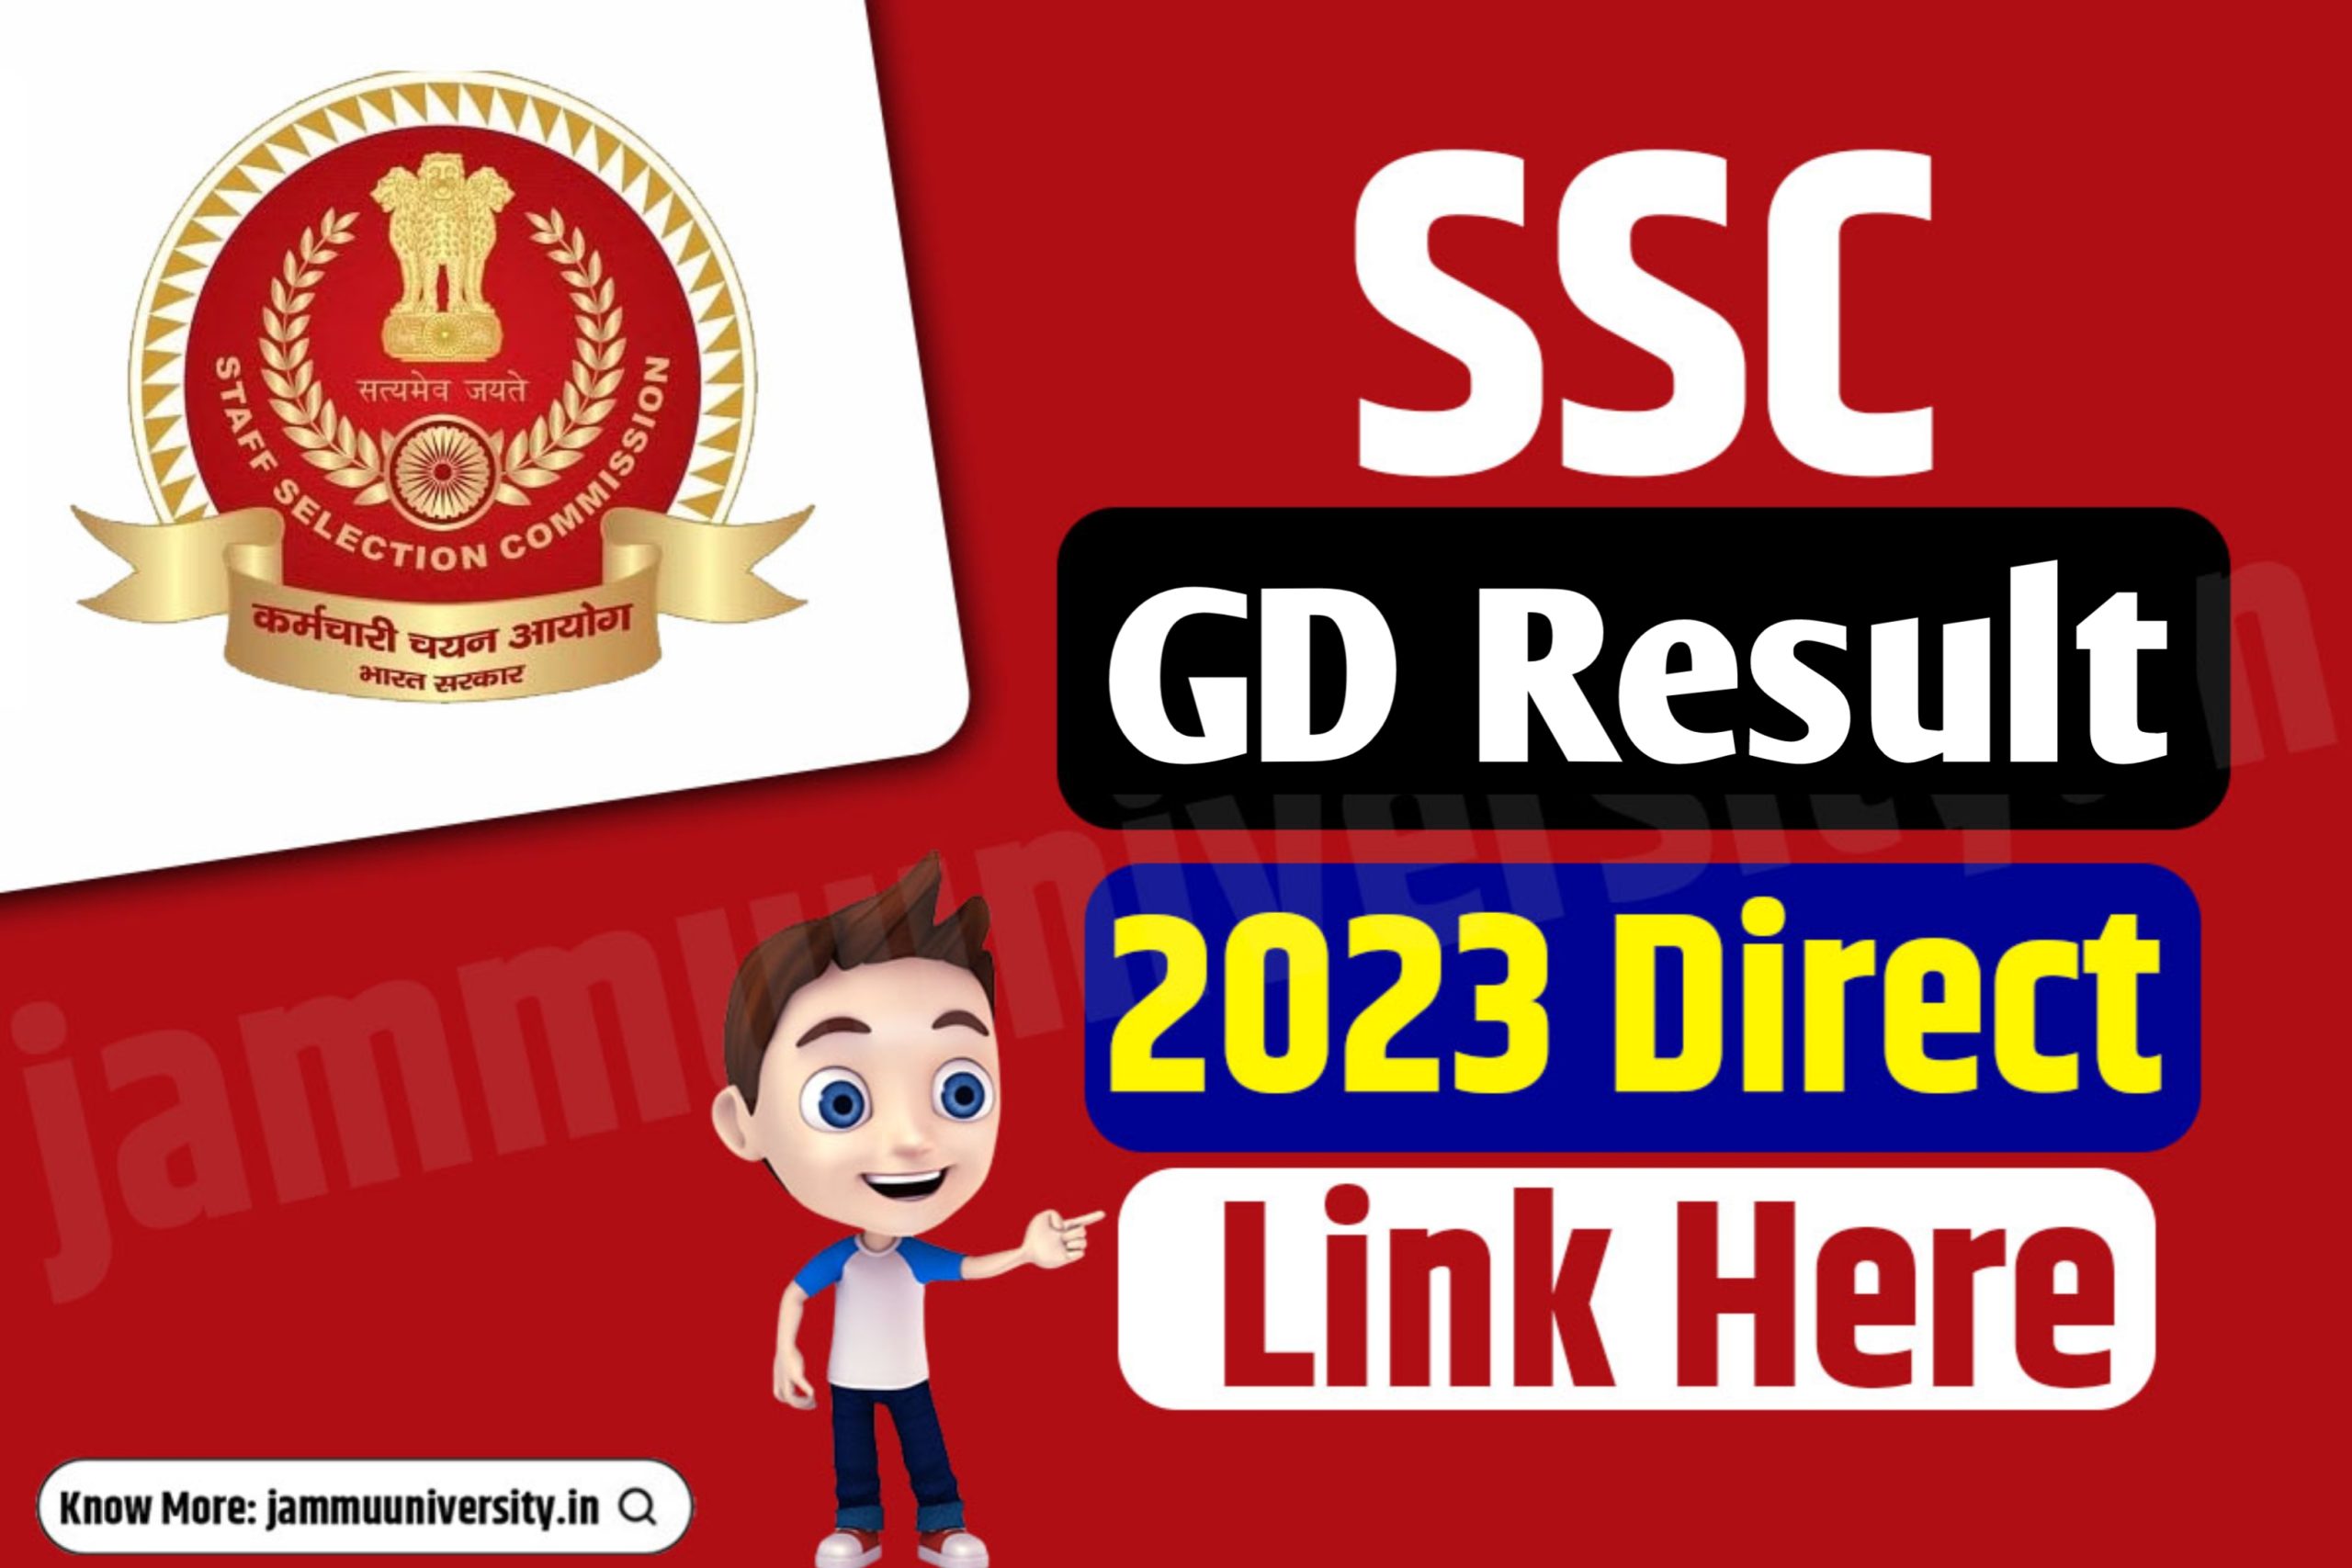 ssc gd result 2023